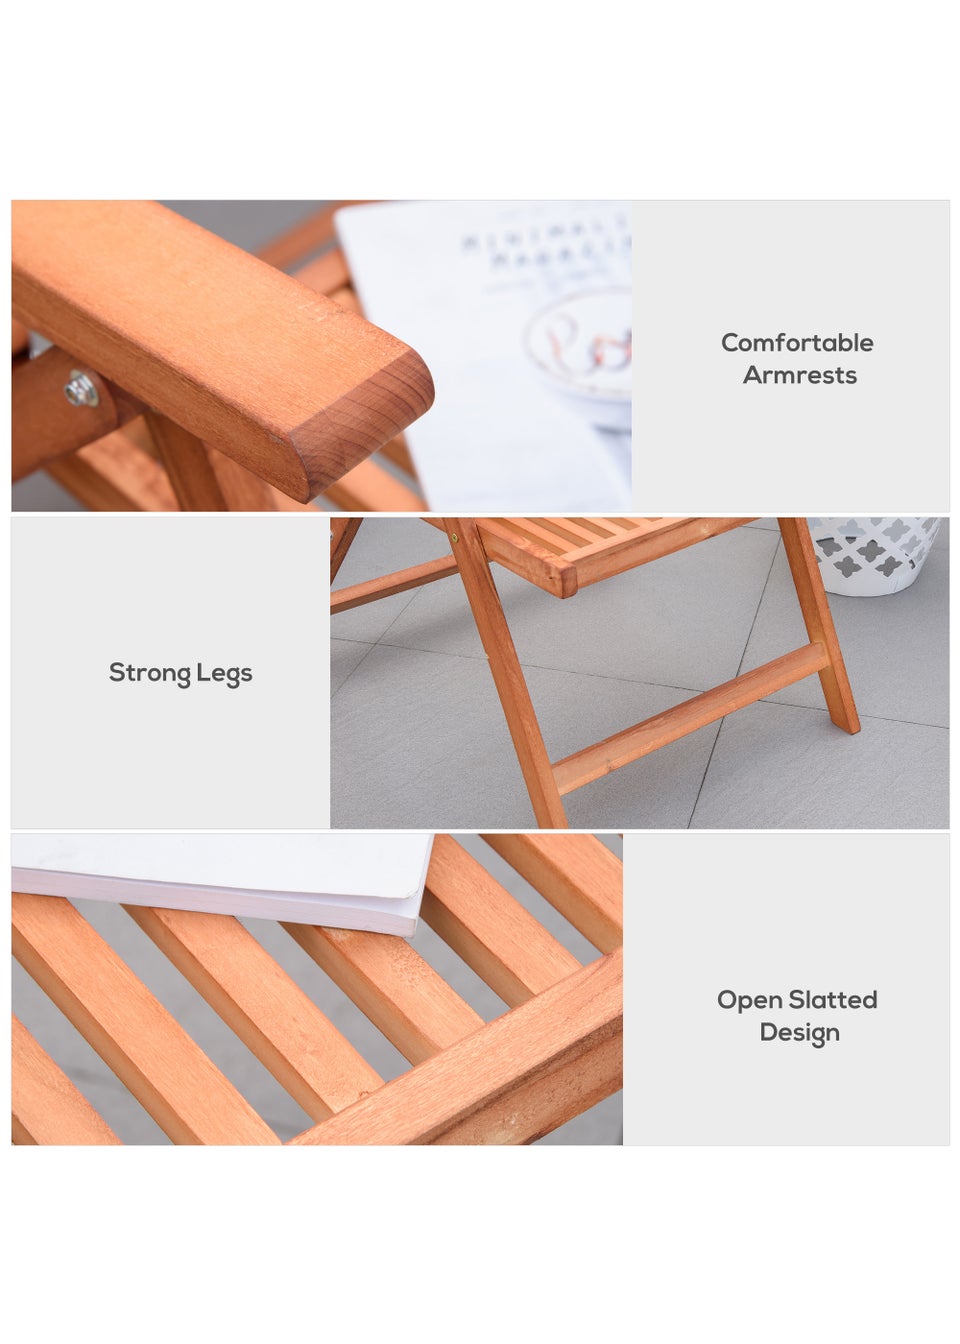 Outsunny 5-Position Garden Dining Chair Acacia Wood Outdoor Recliner